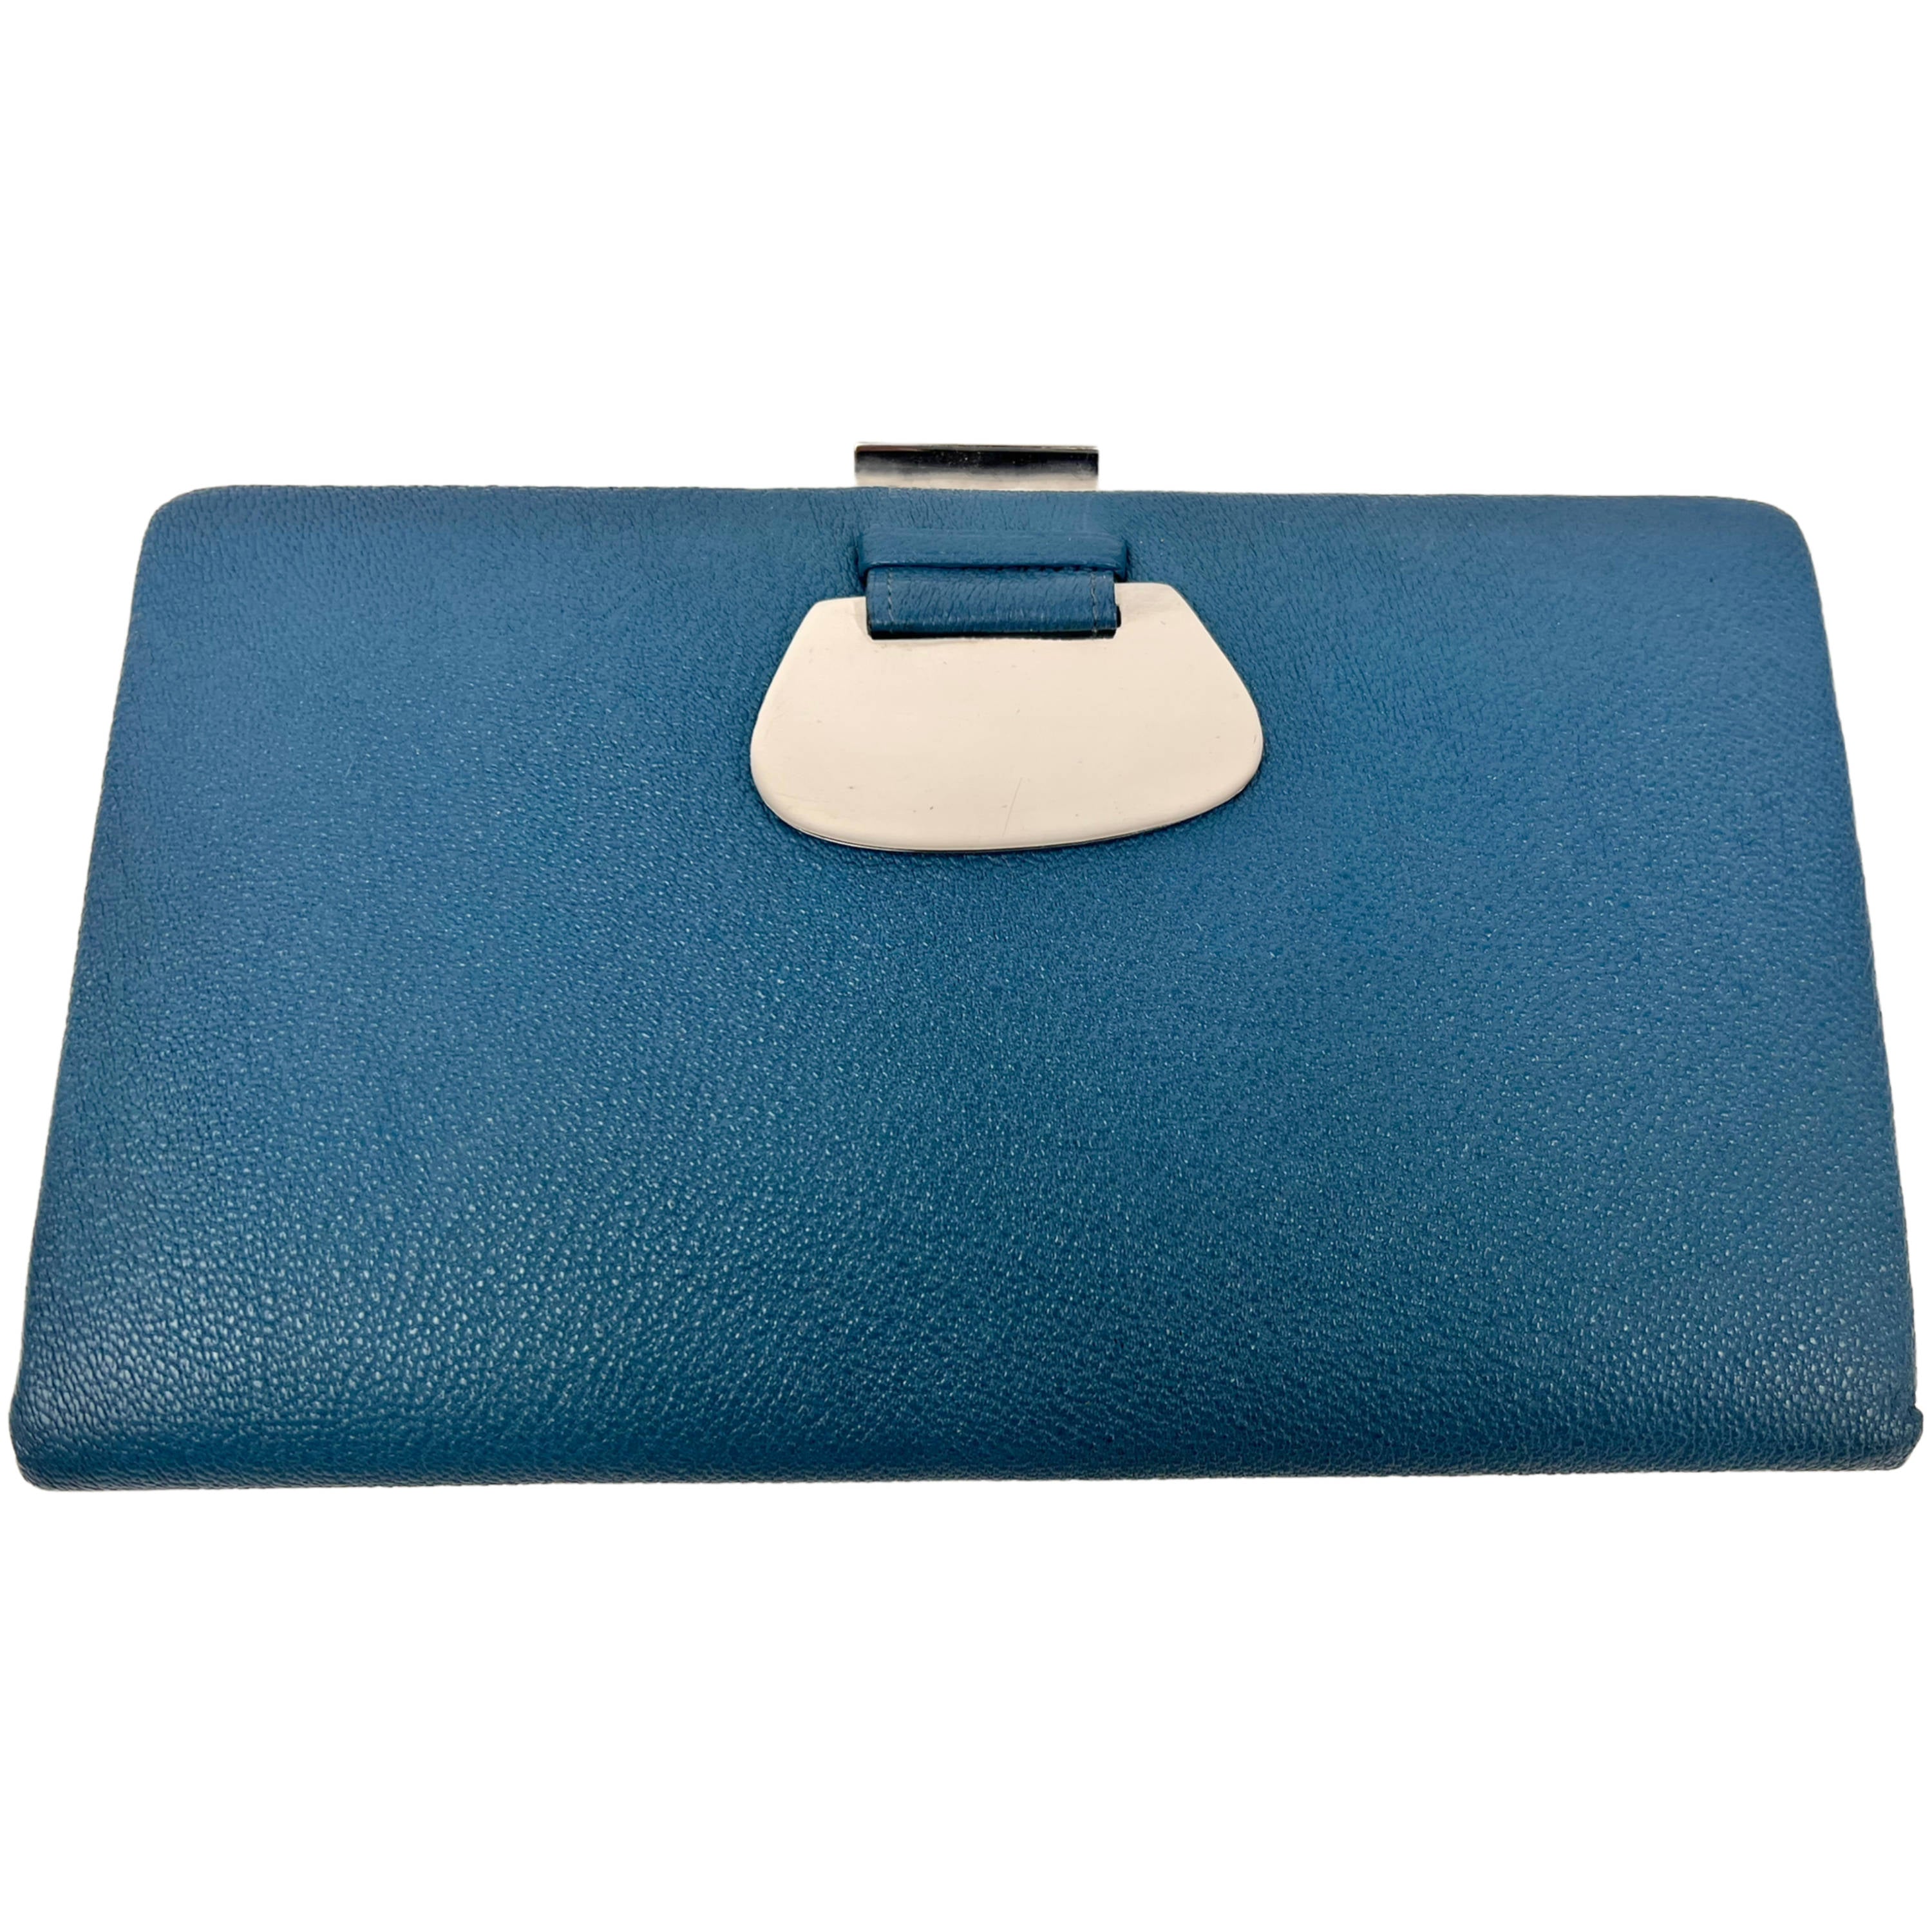 Fabiola Pedrazzini Women's Colorblock Envelope Clutch Handbag Blue Siz -  Shop Linda's Stuff